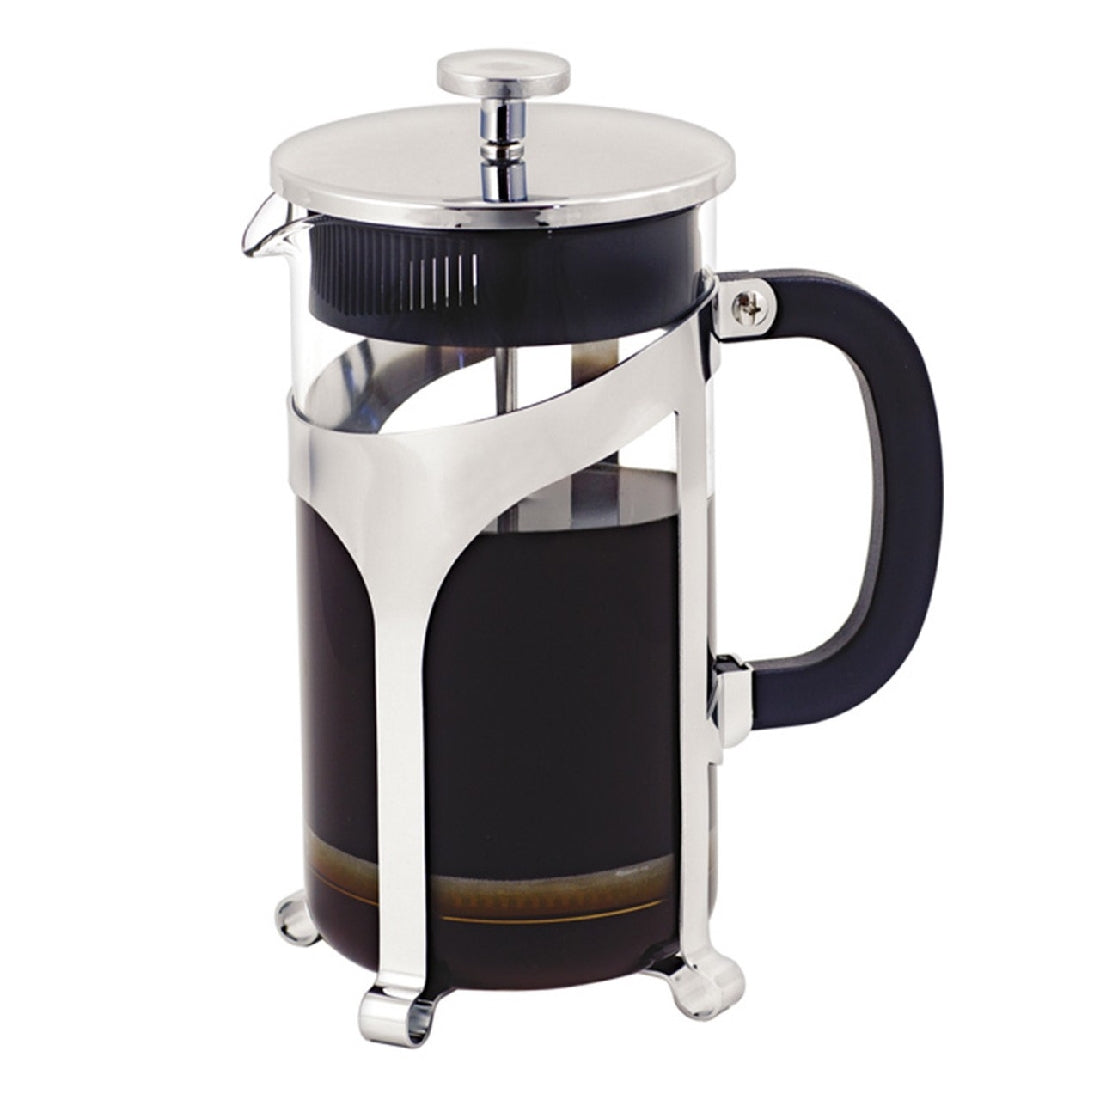 Avanti Cafe Press Coffee Plunger 1l - 8 Cup